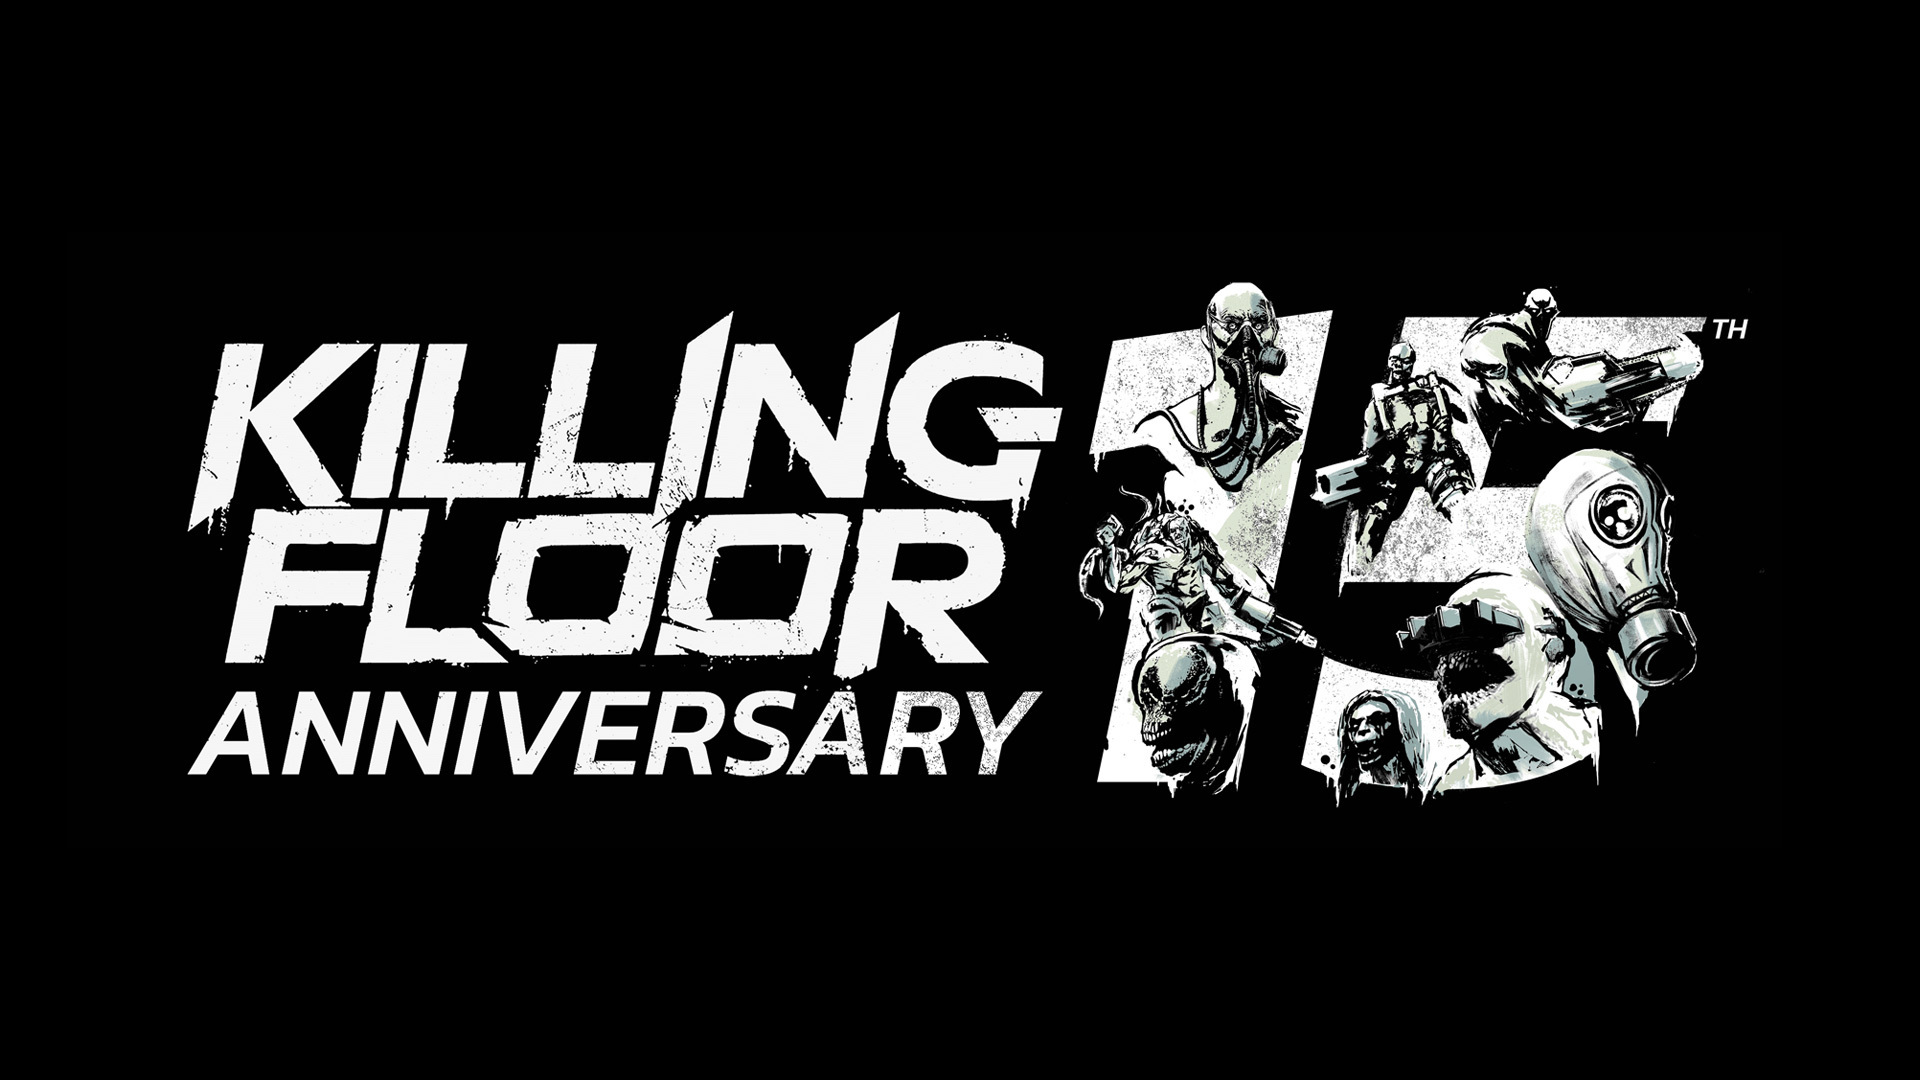 Франшиза Killing Floor празднует 15 лет юбилея